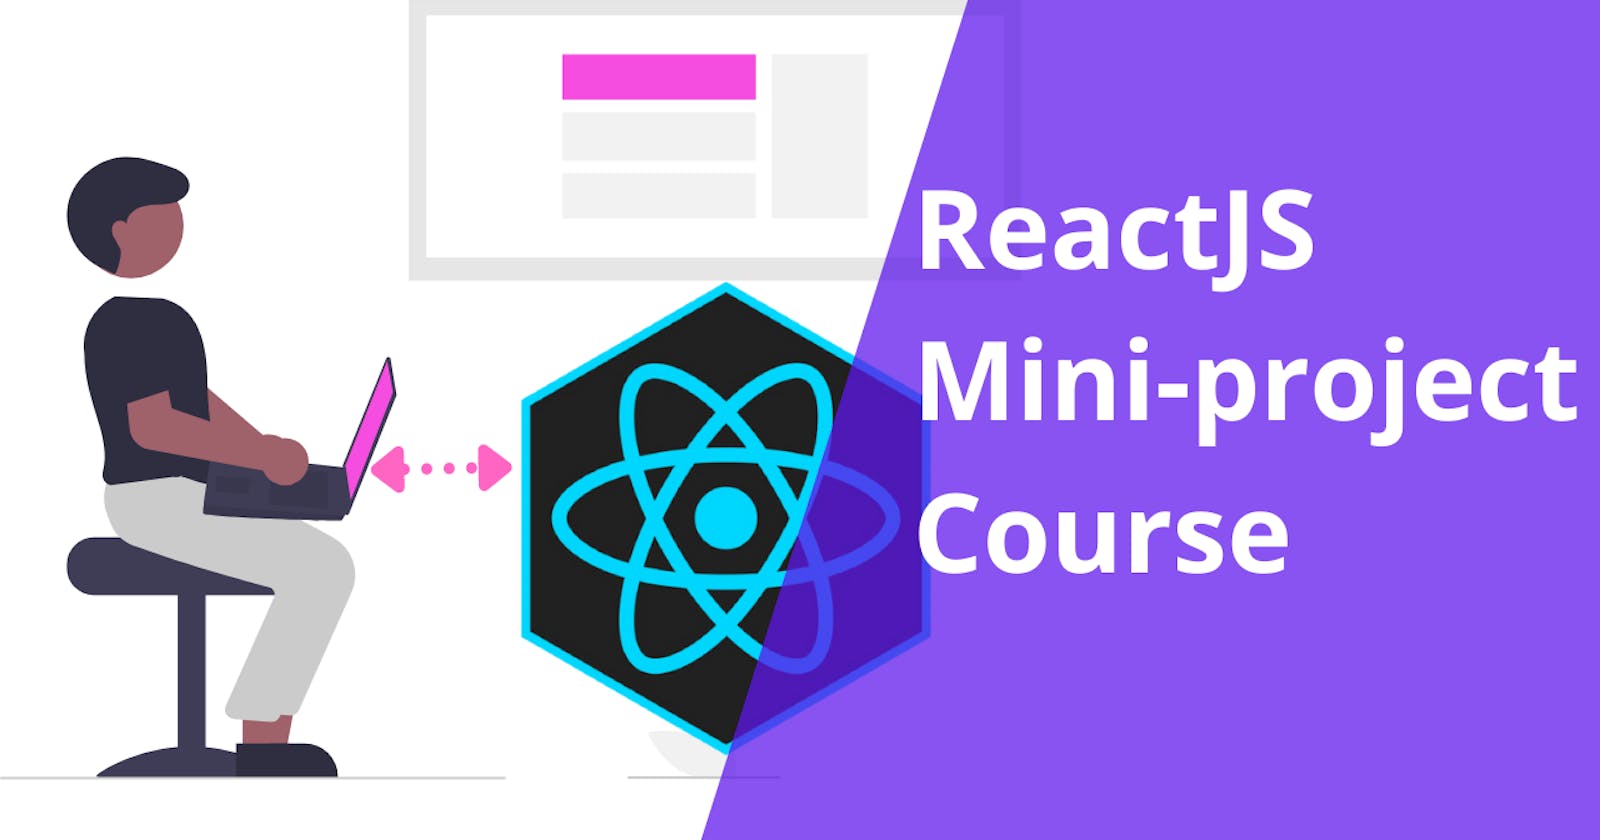 New ReactJS Mini-project Course Alert